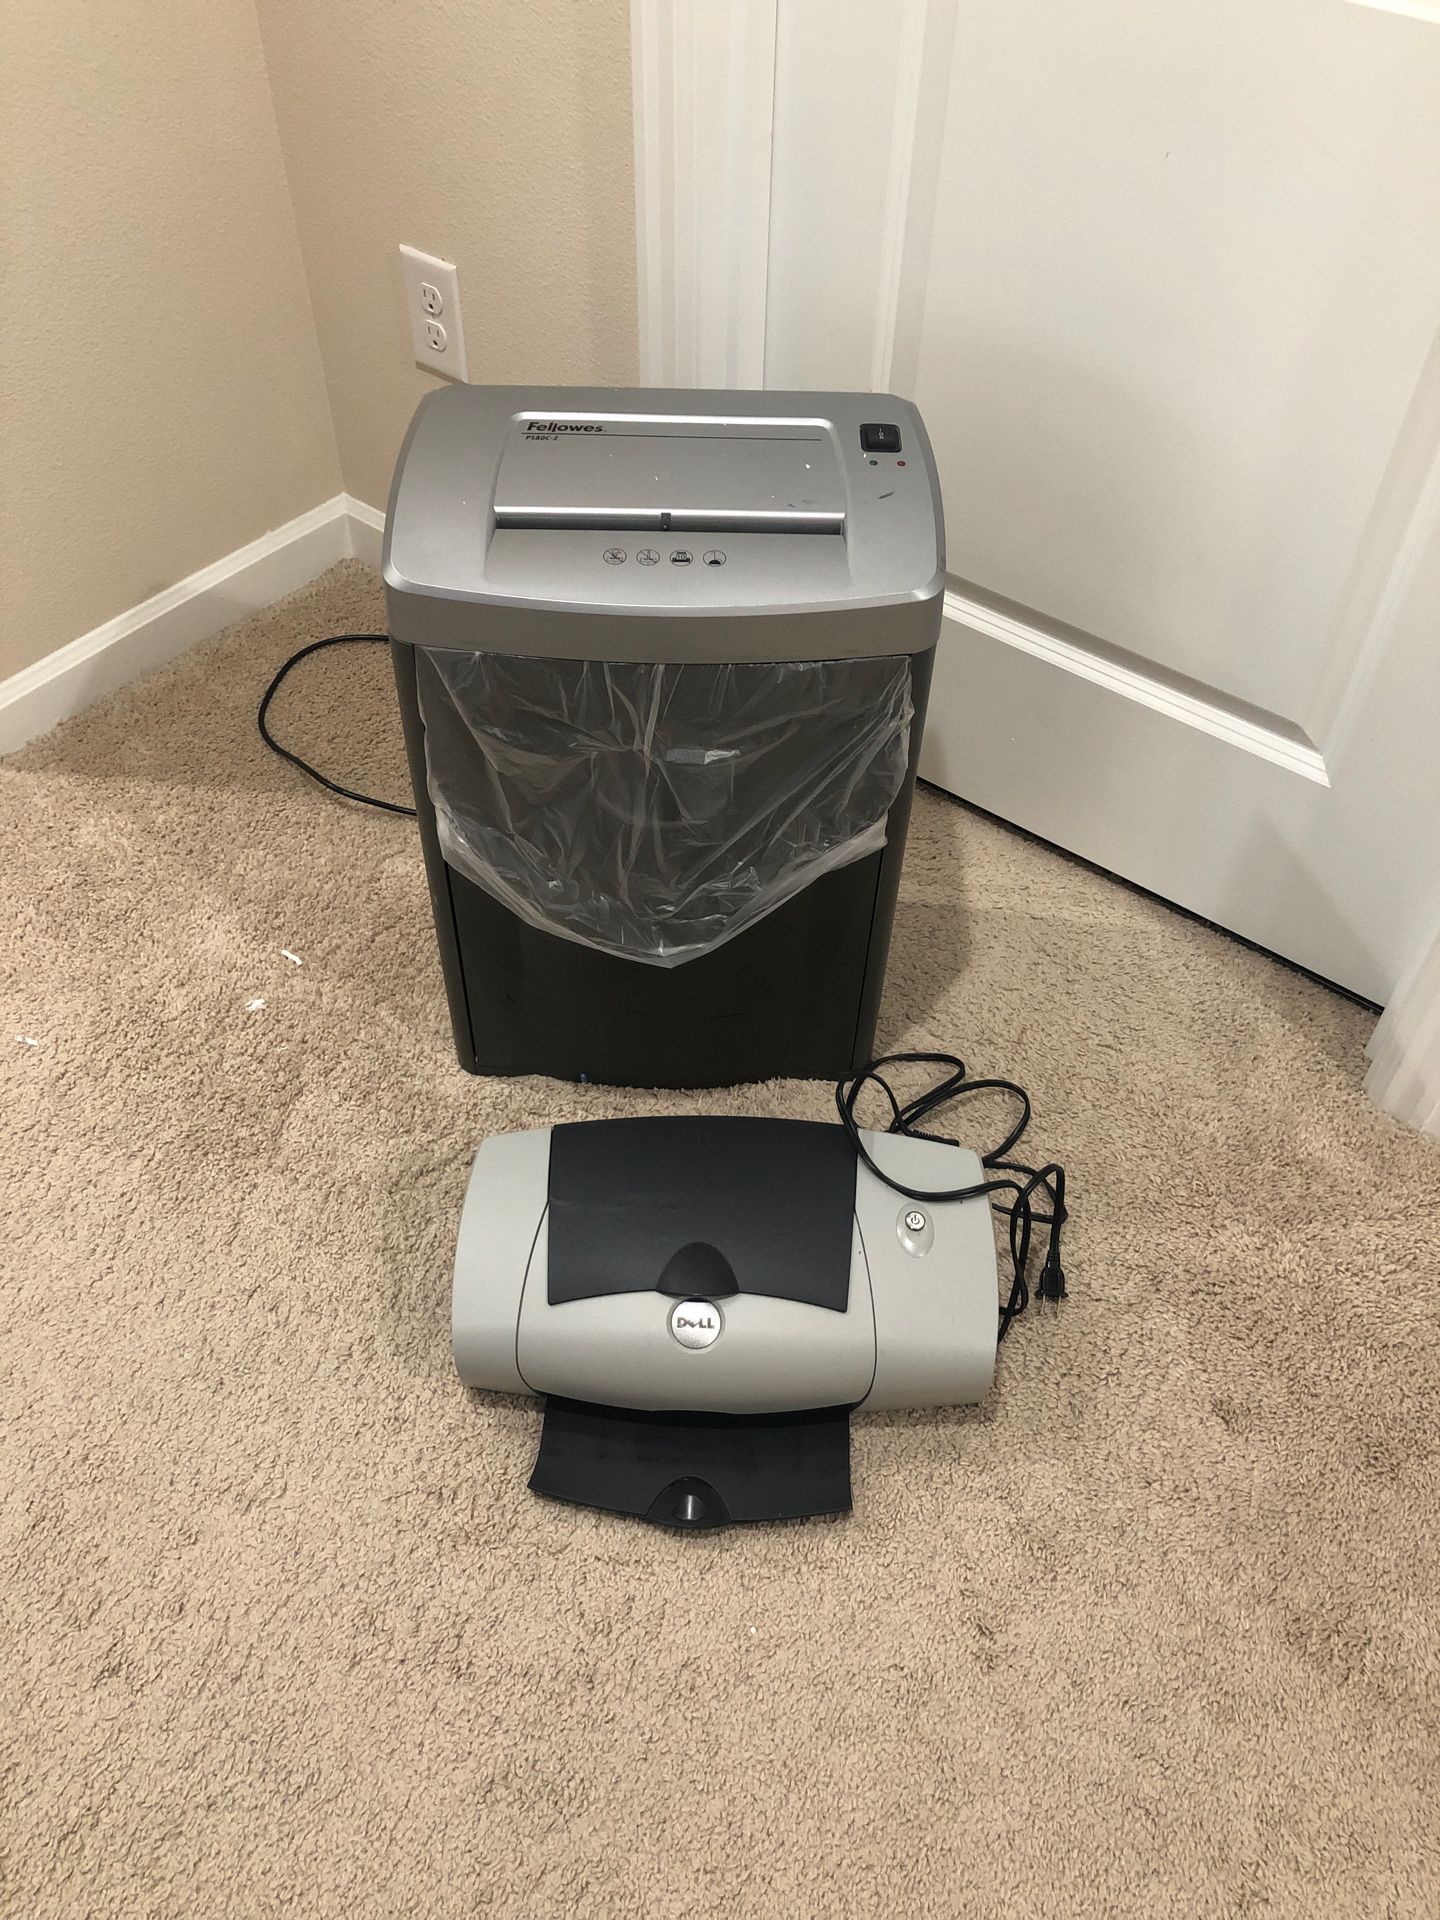 Dell printer and paper shredder